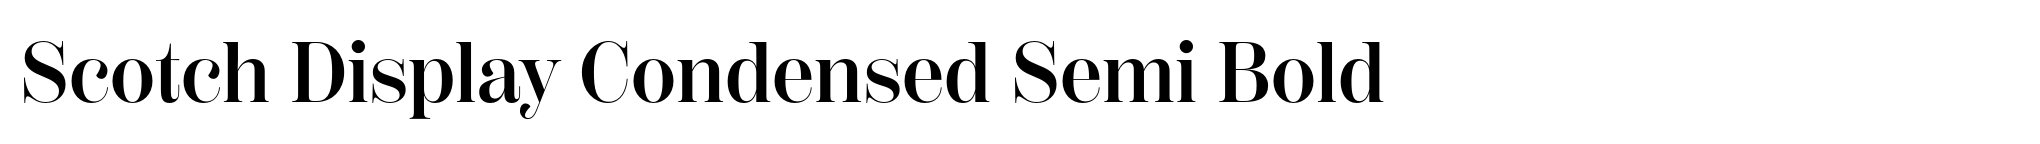 Scotch Display Condensed Semi Bold image